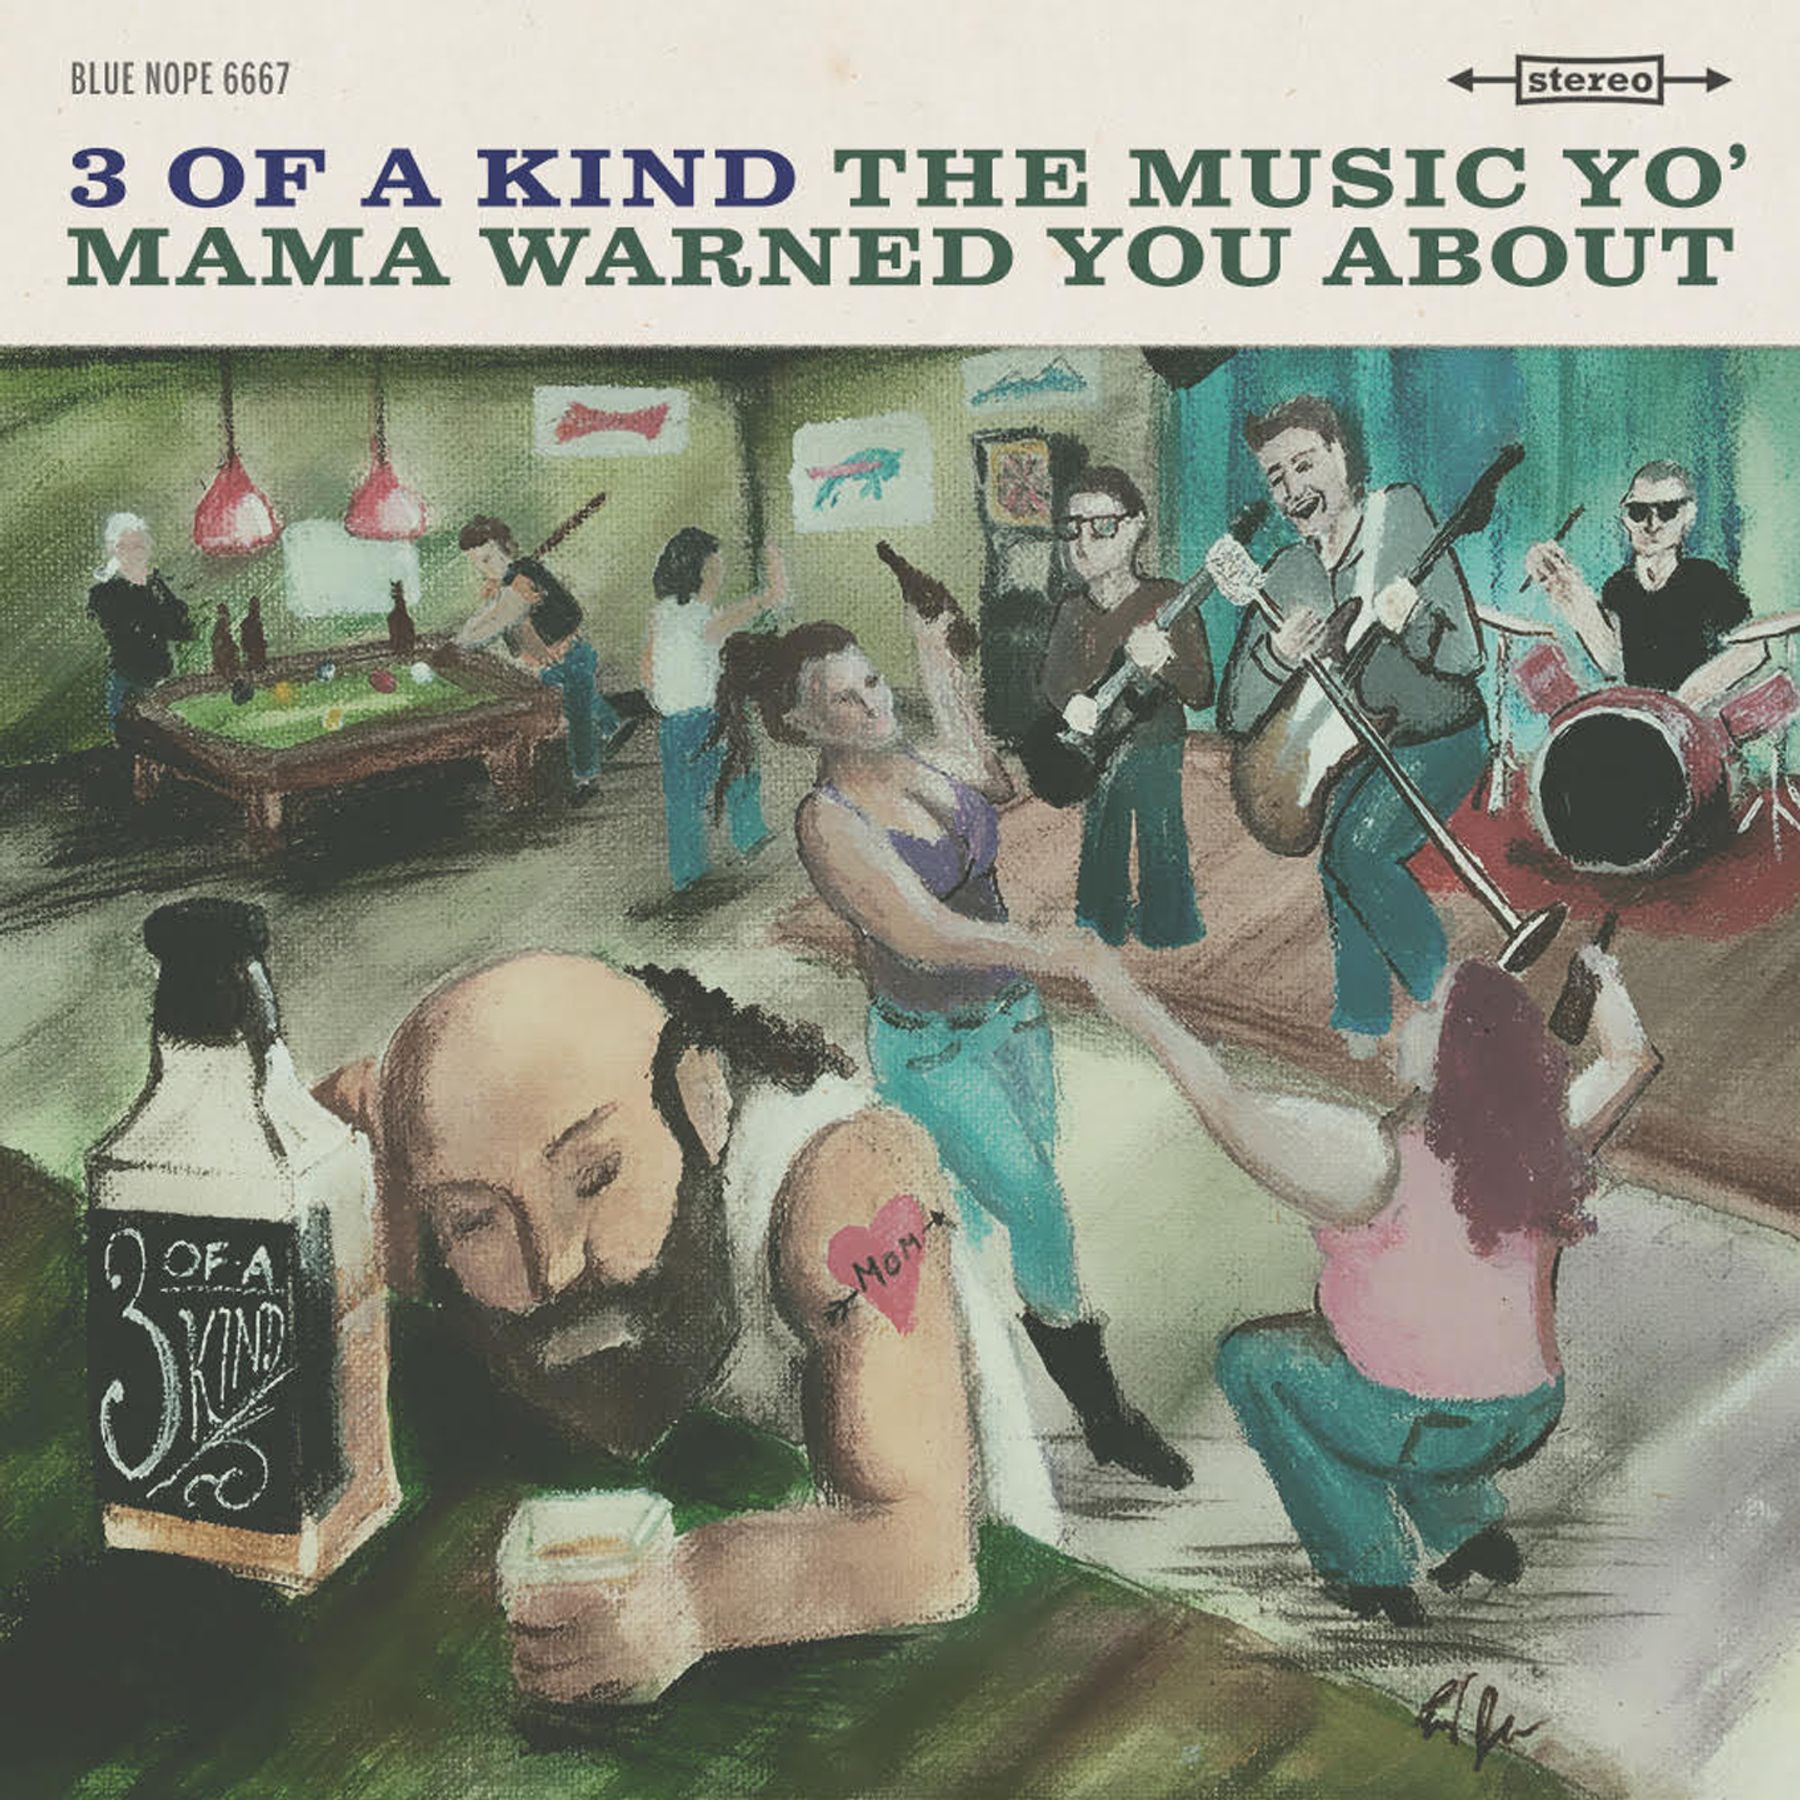 Yo Mama: albums, songs, playlists